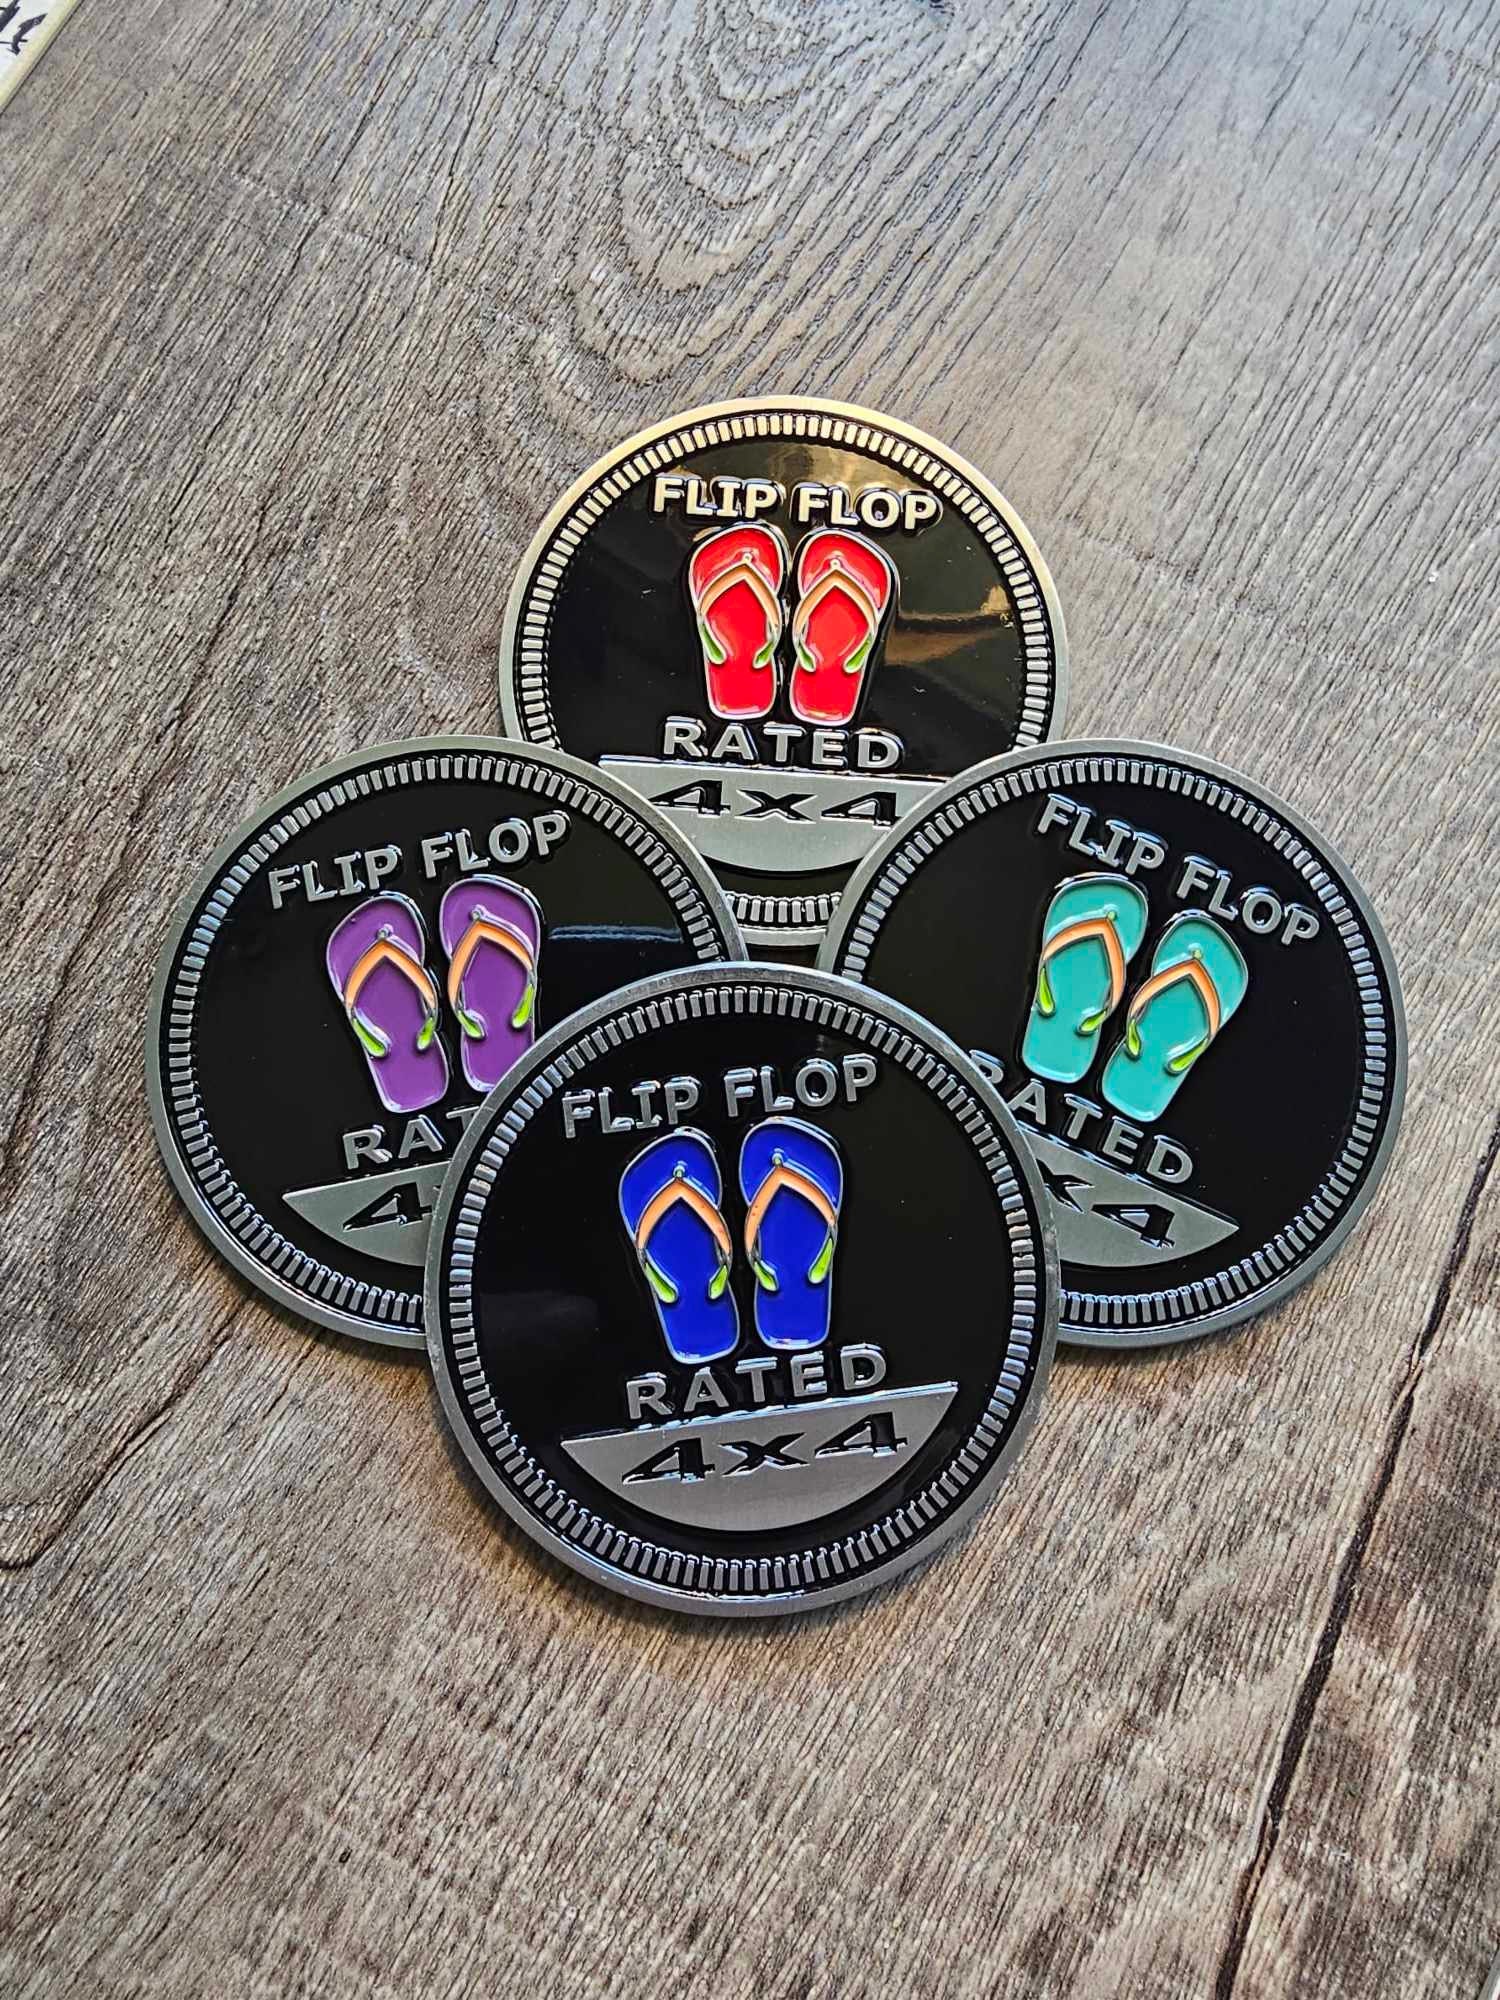 Tufskinz Fun Rated Badges Brushed Silver 1 Piece Kit , badges